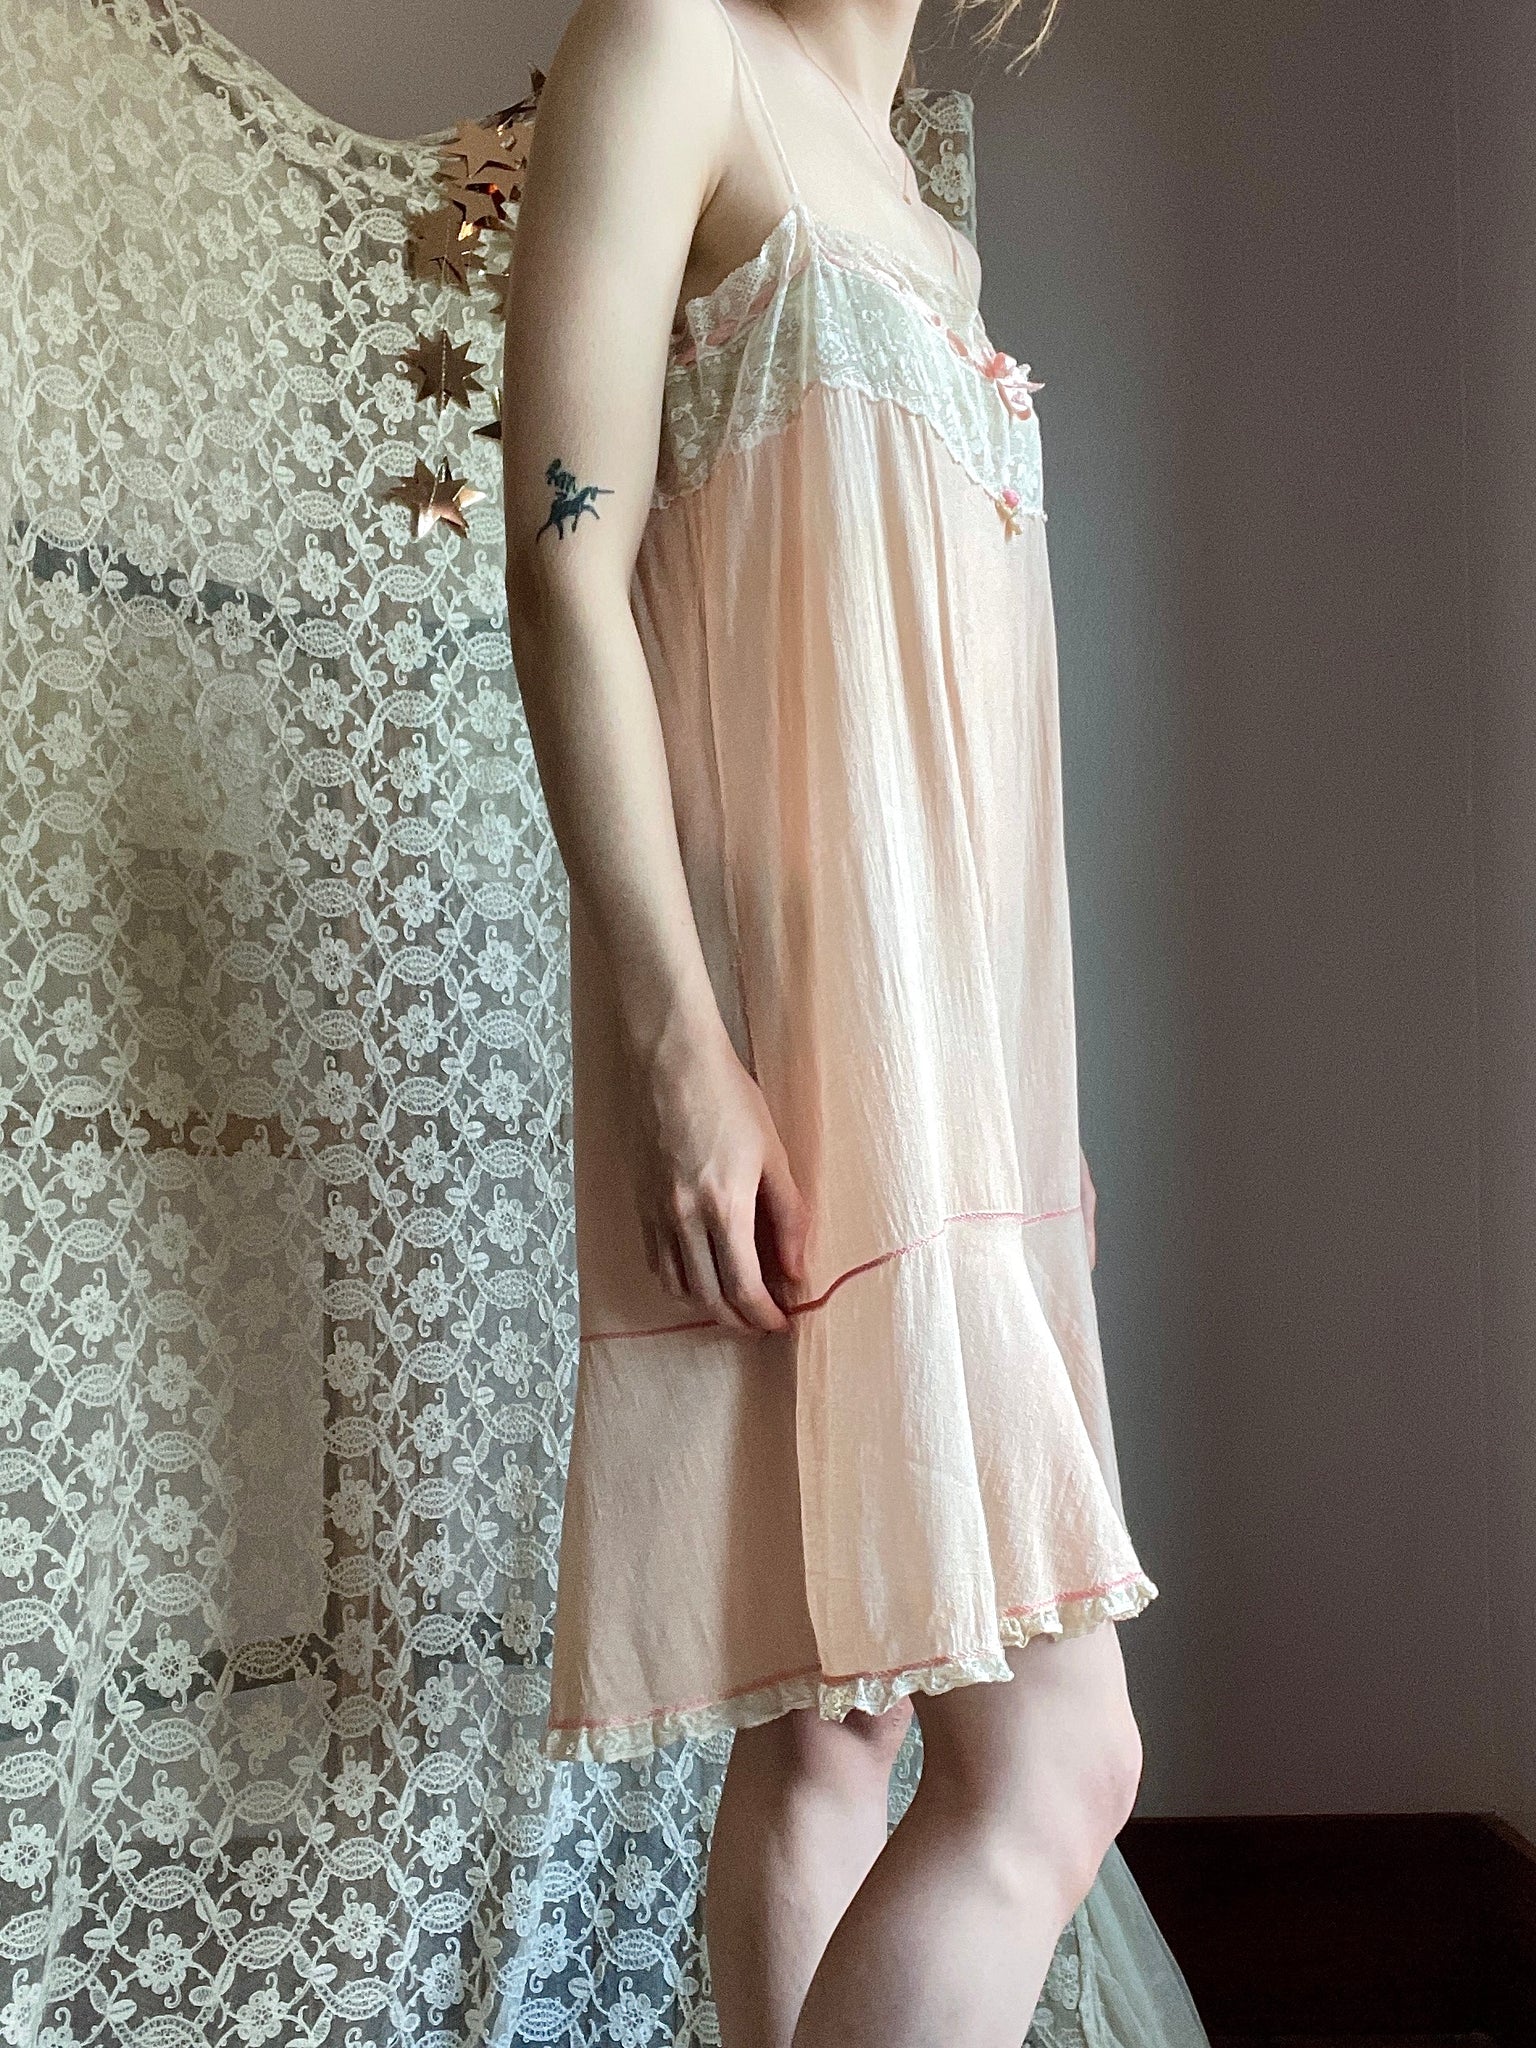 1930s Pink Teddy Mini Step In Slip Dress Floral White Lace Original Brocade Ribbon